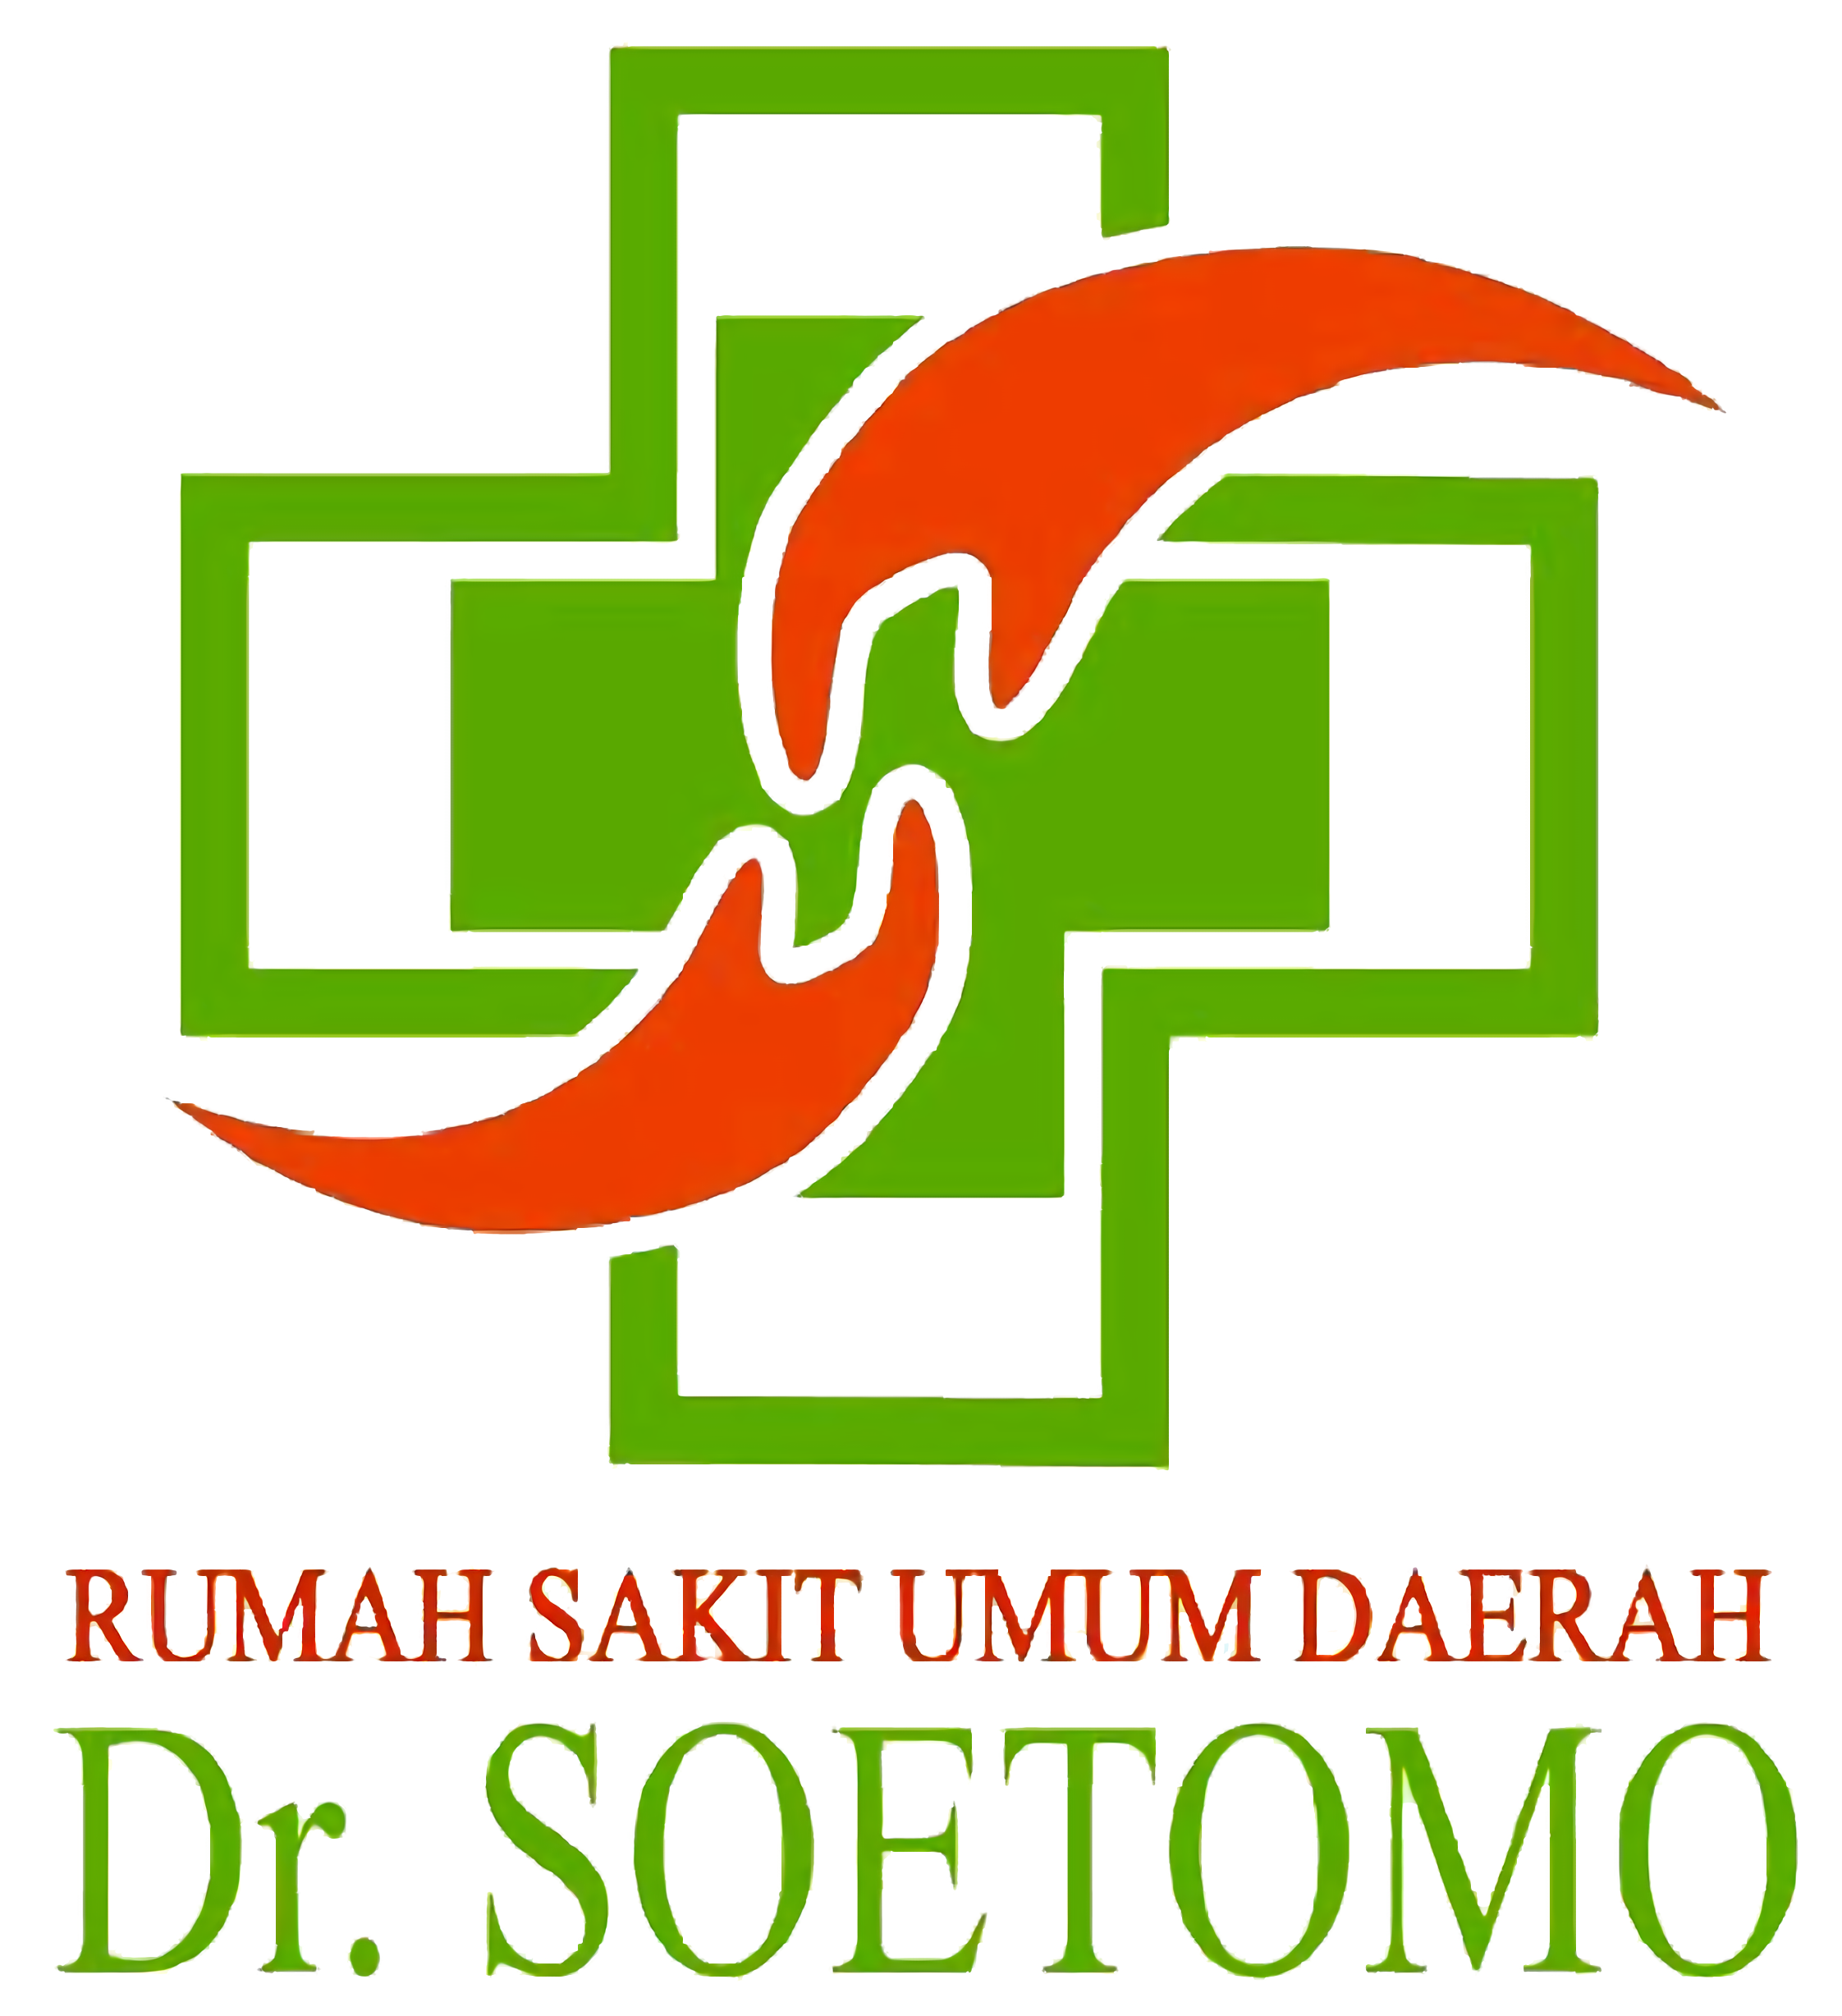 rs-dr.soetomo